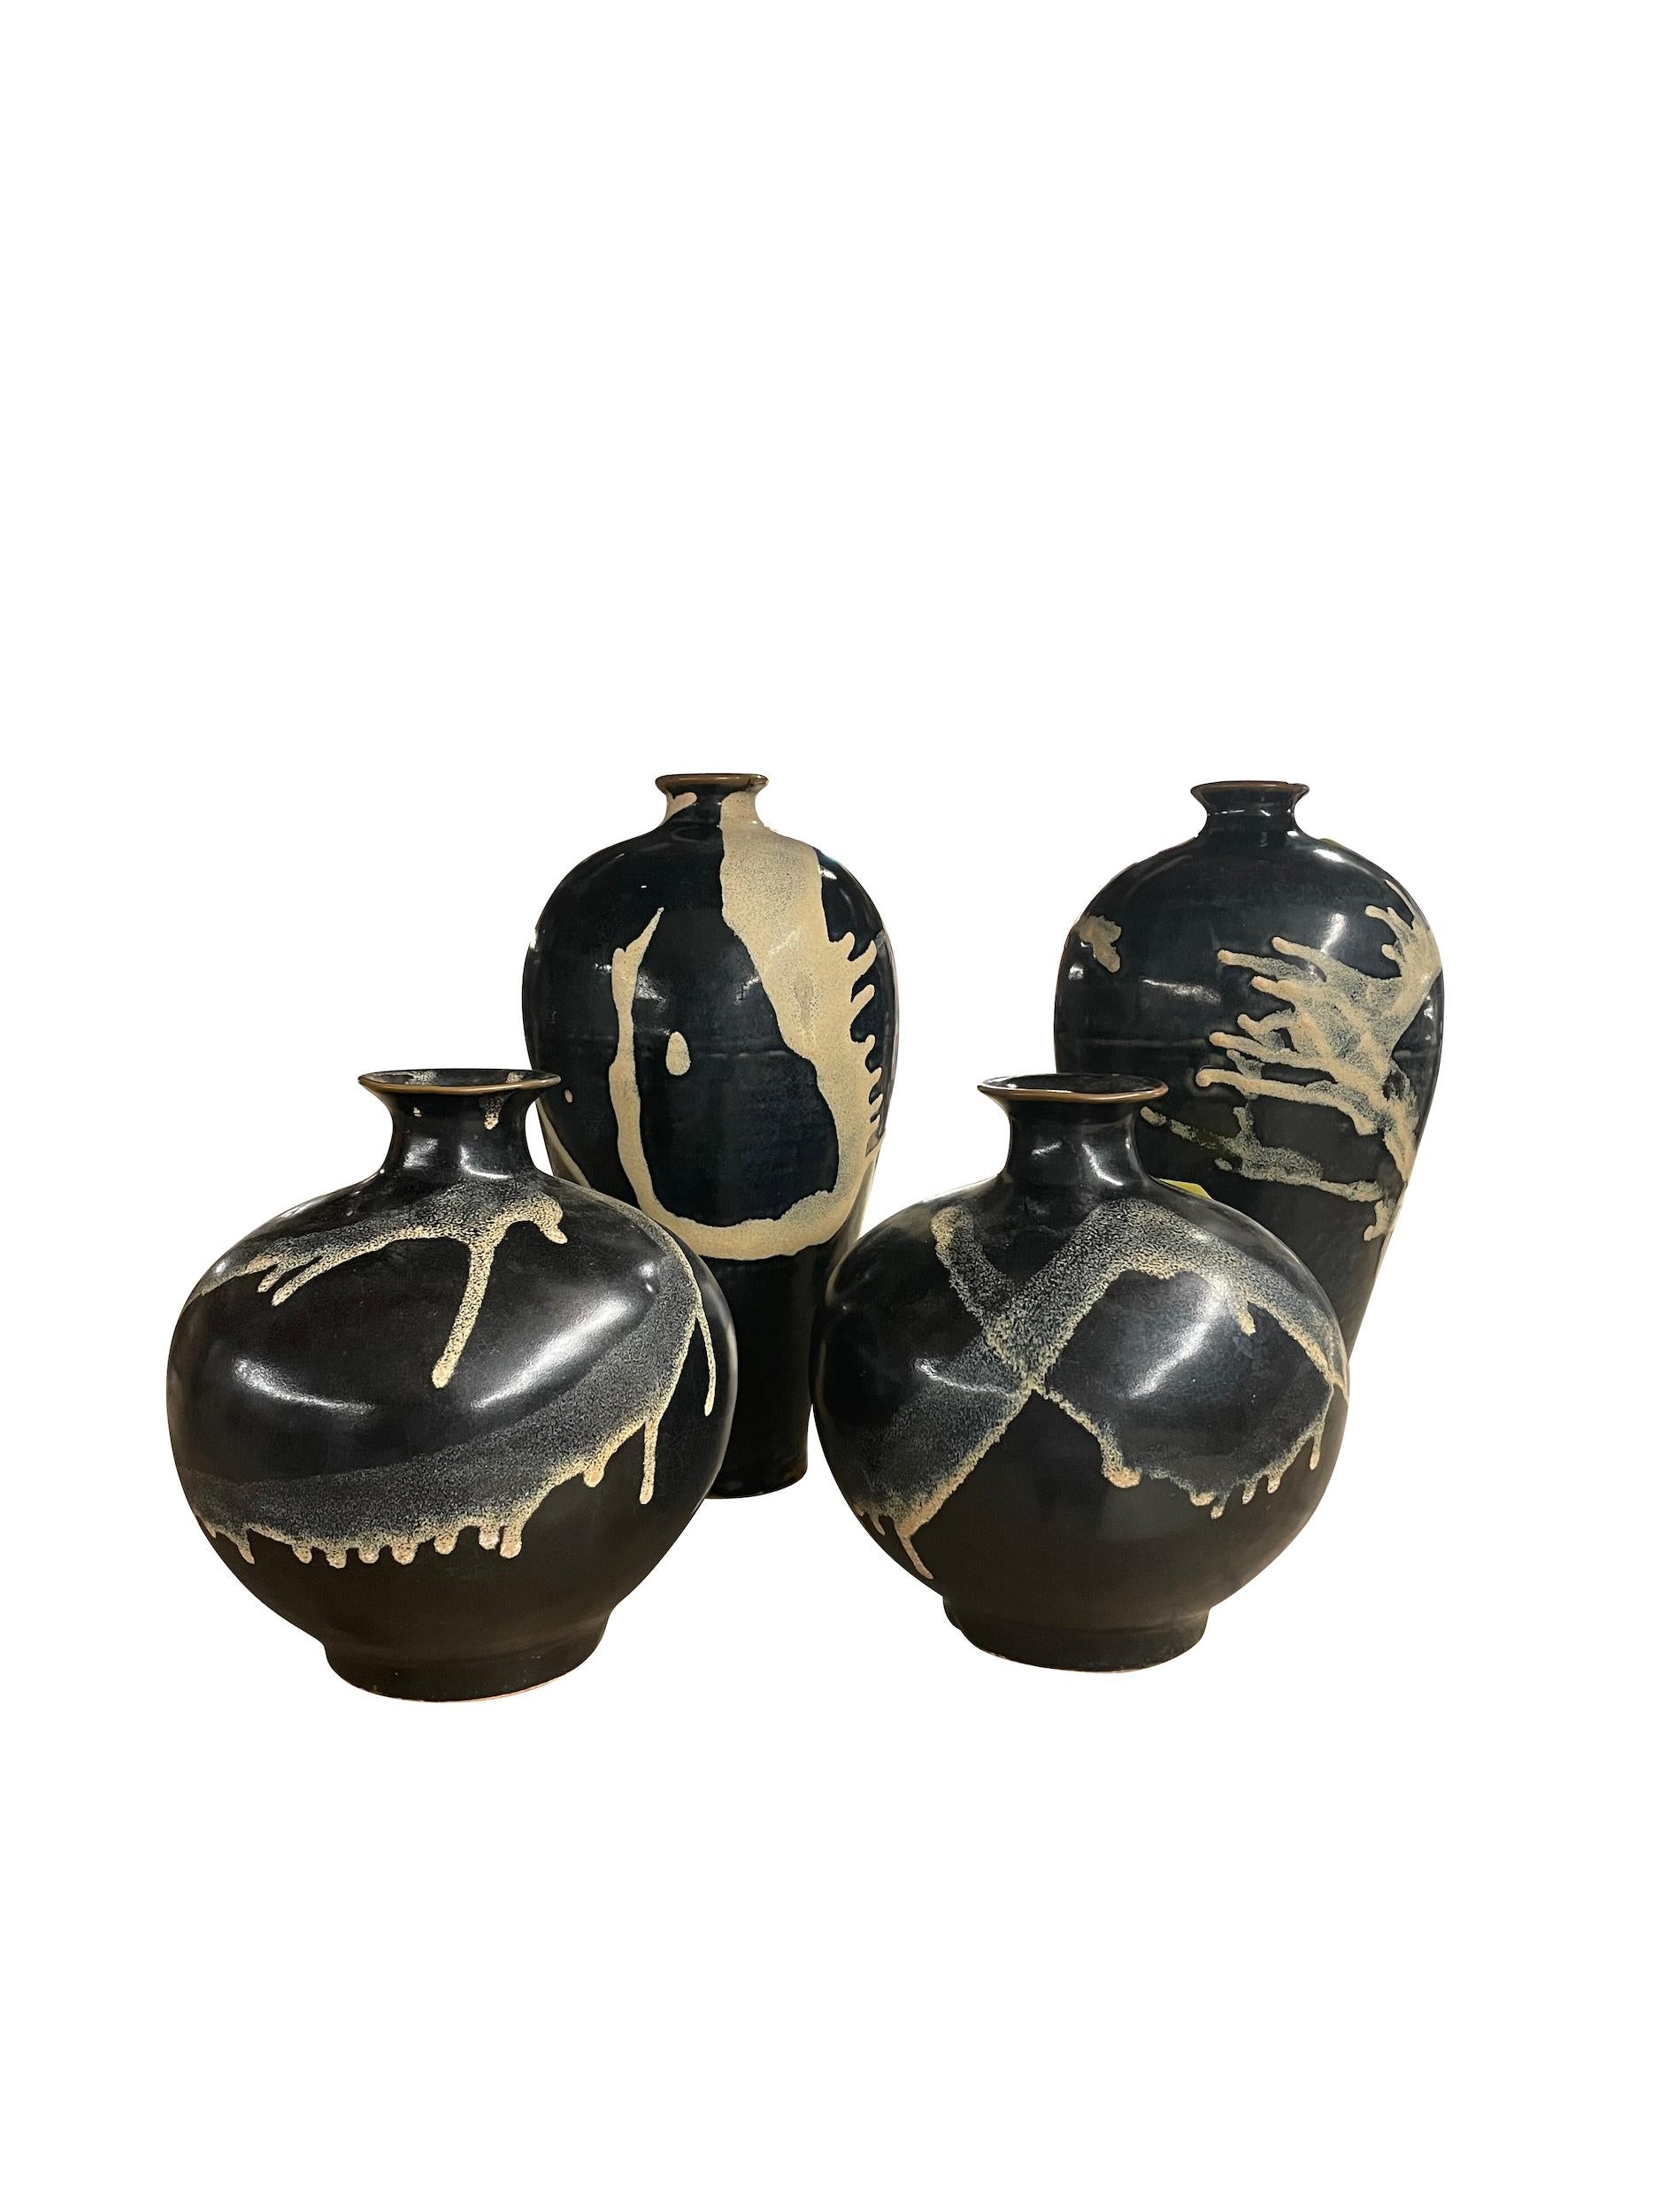 Black And Cream Splatter Design Ceramic Tall Vase, China, Contemporary For Sale 1